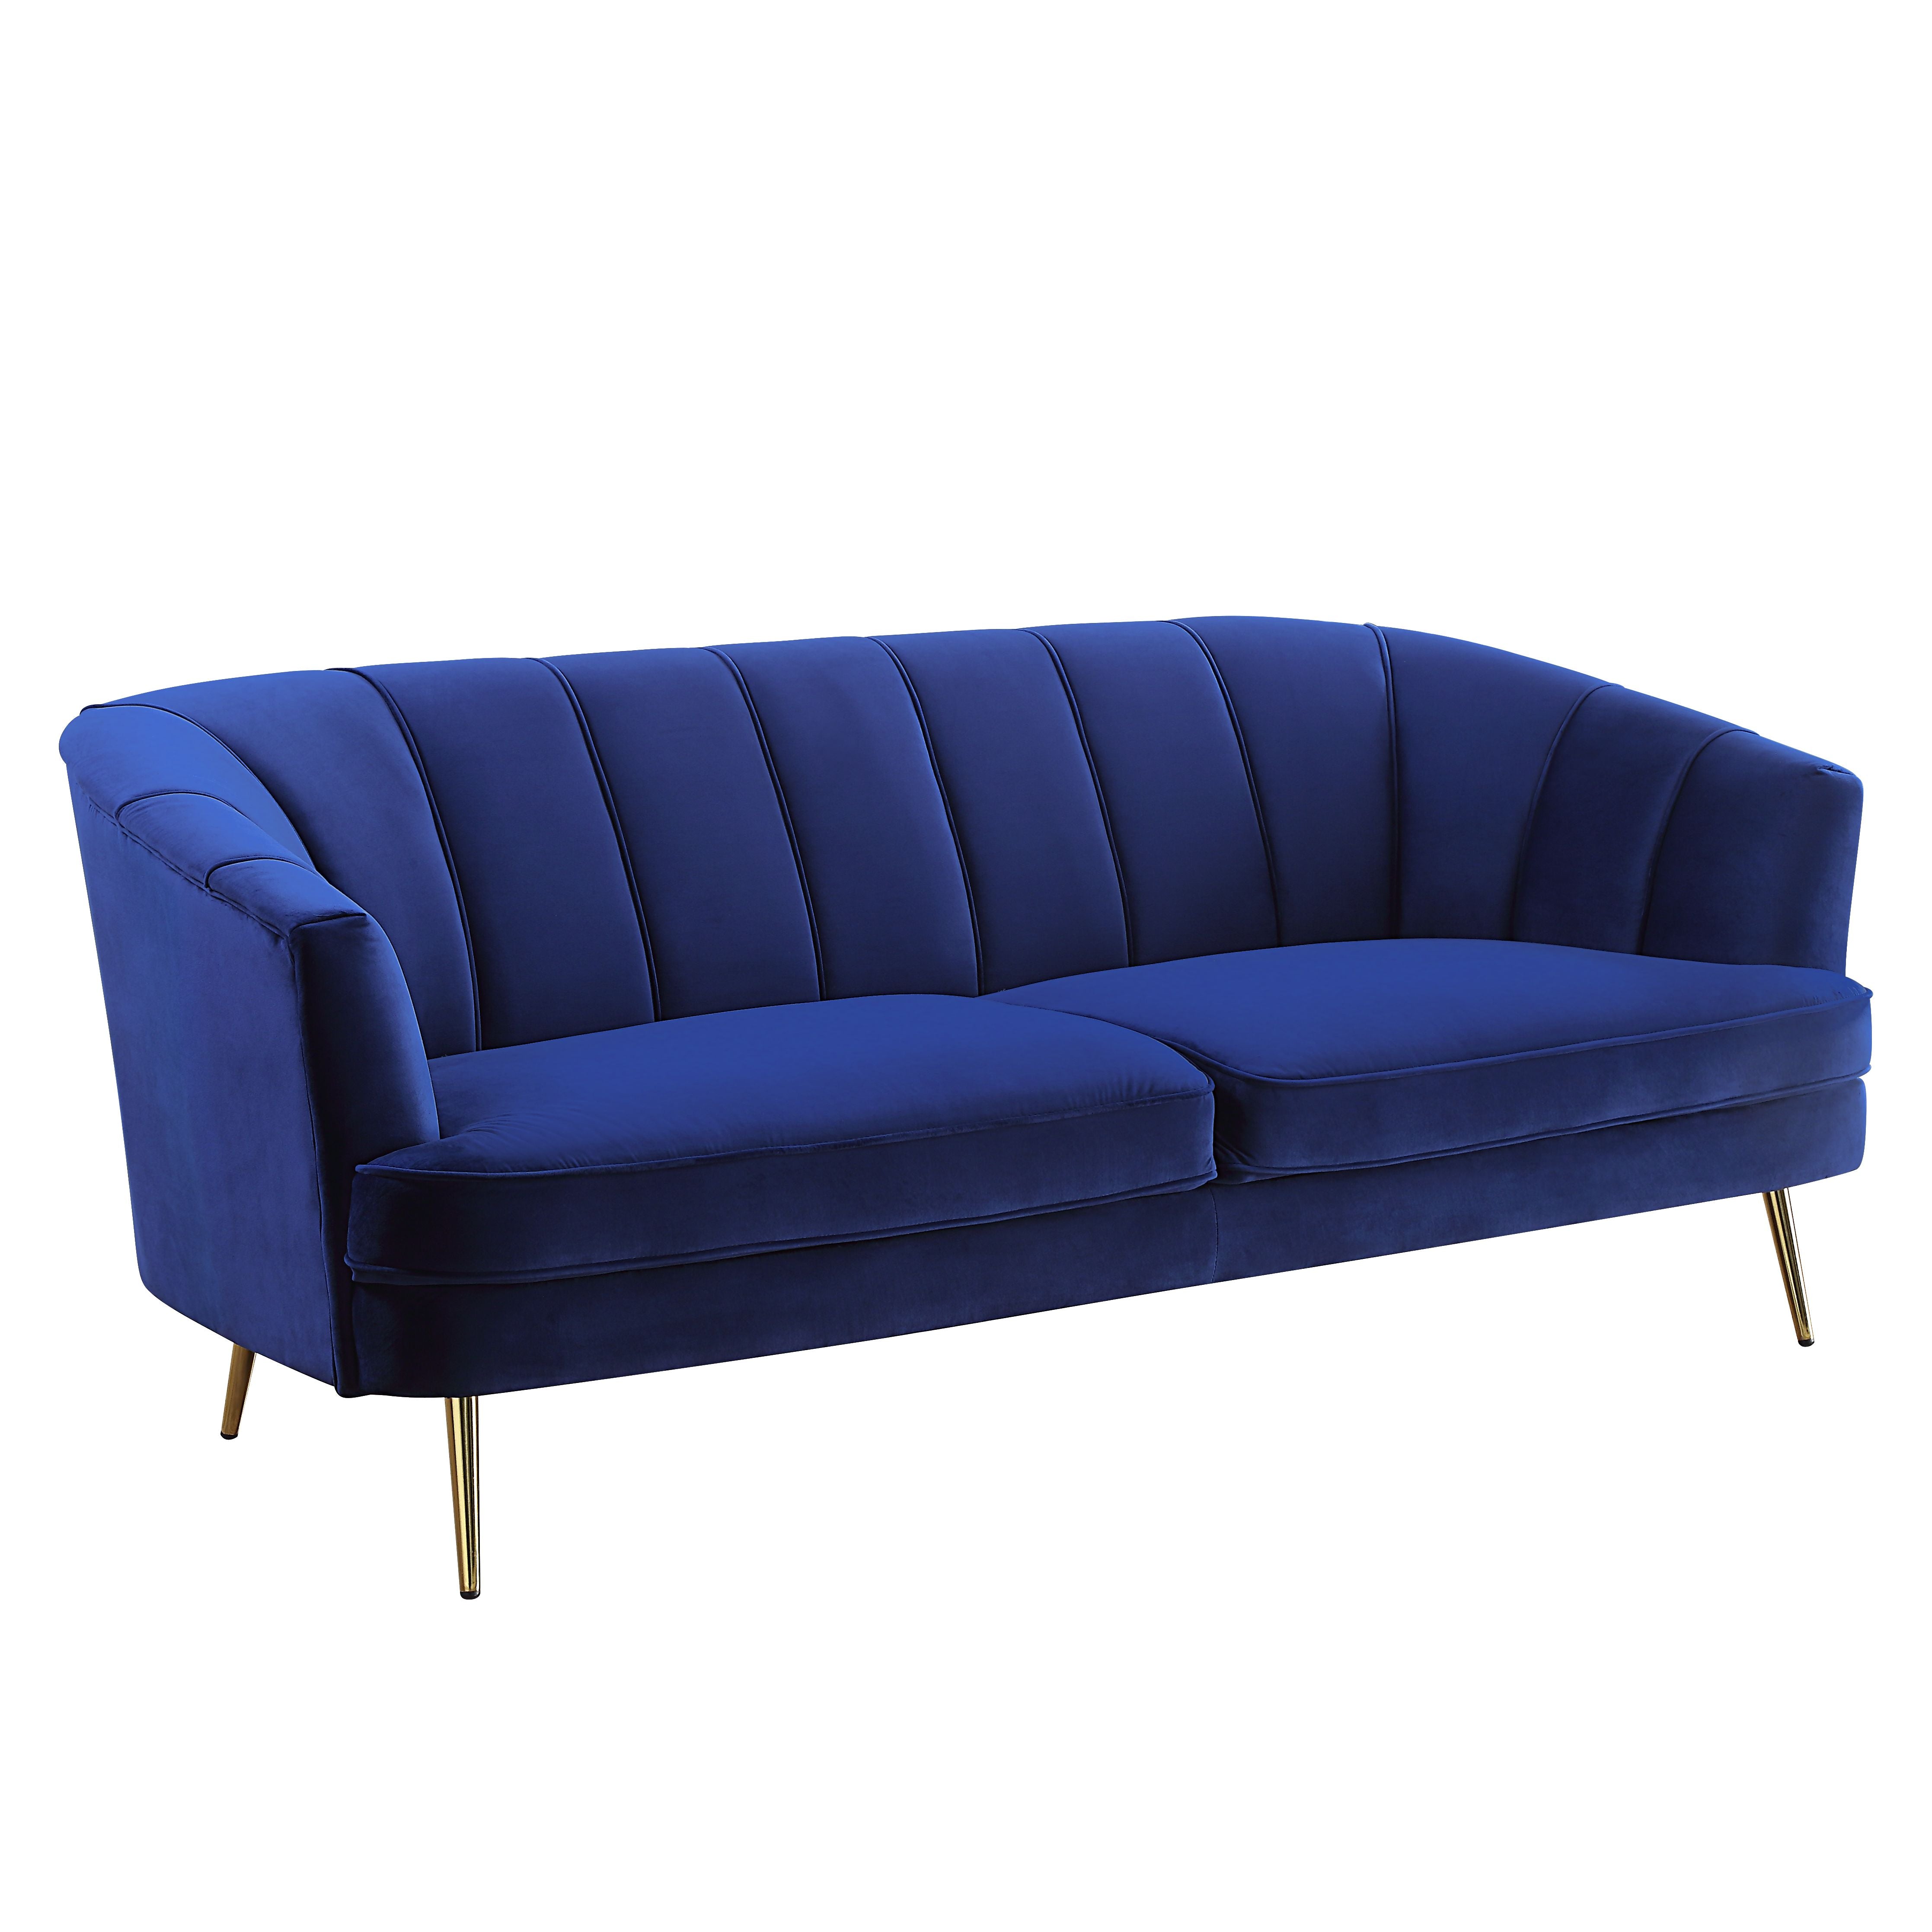 ACME Furniture Sofas & Couches - ACME Eivor Sofa, Blue Velvet